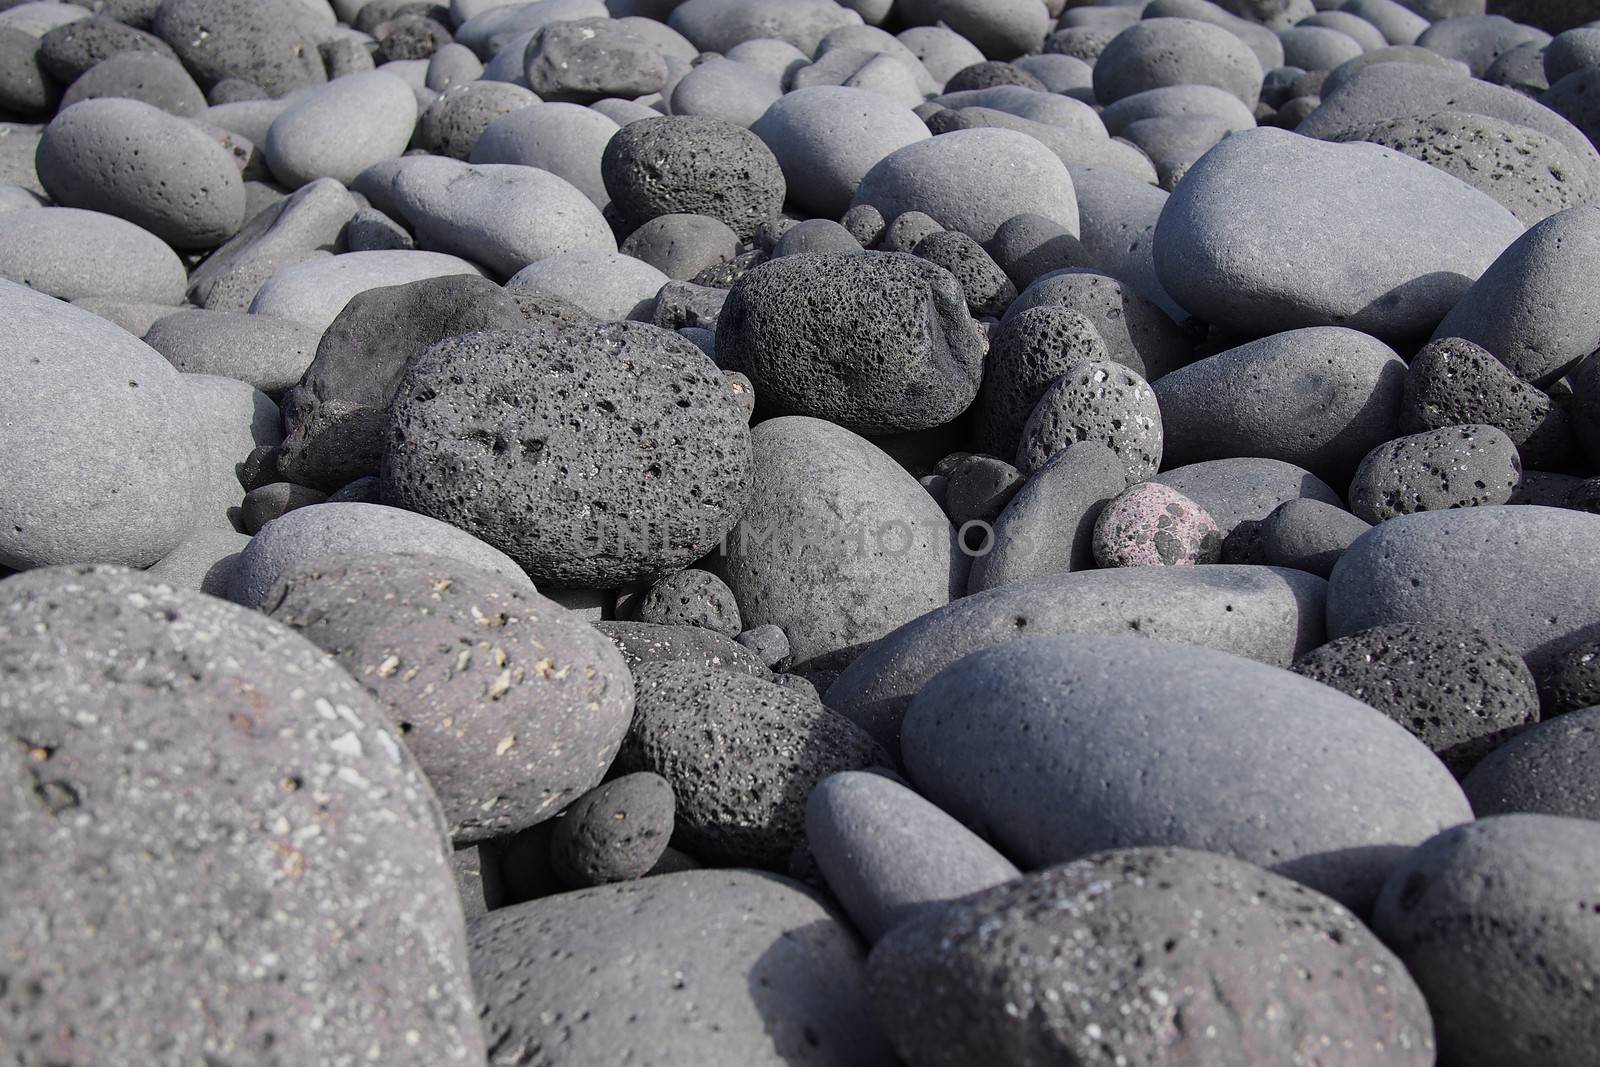 Stones, as hard as rocks